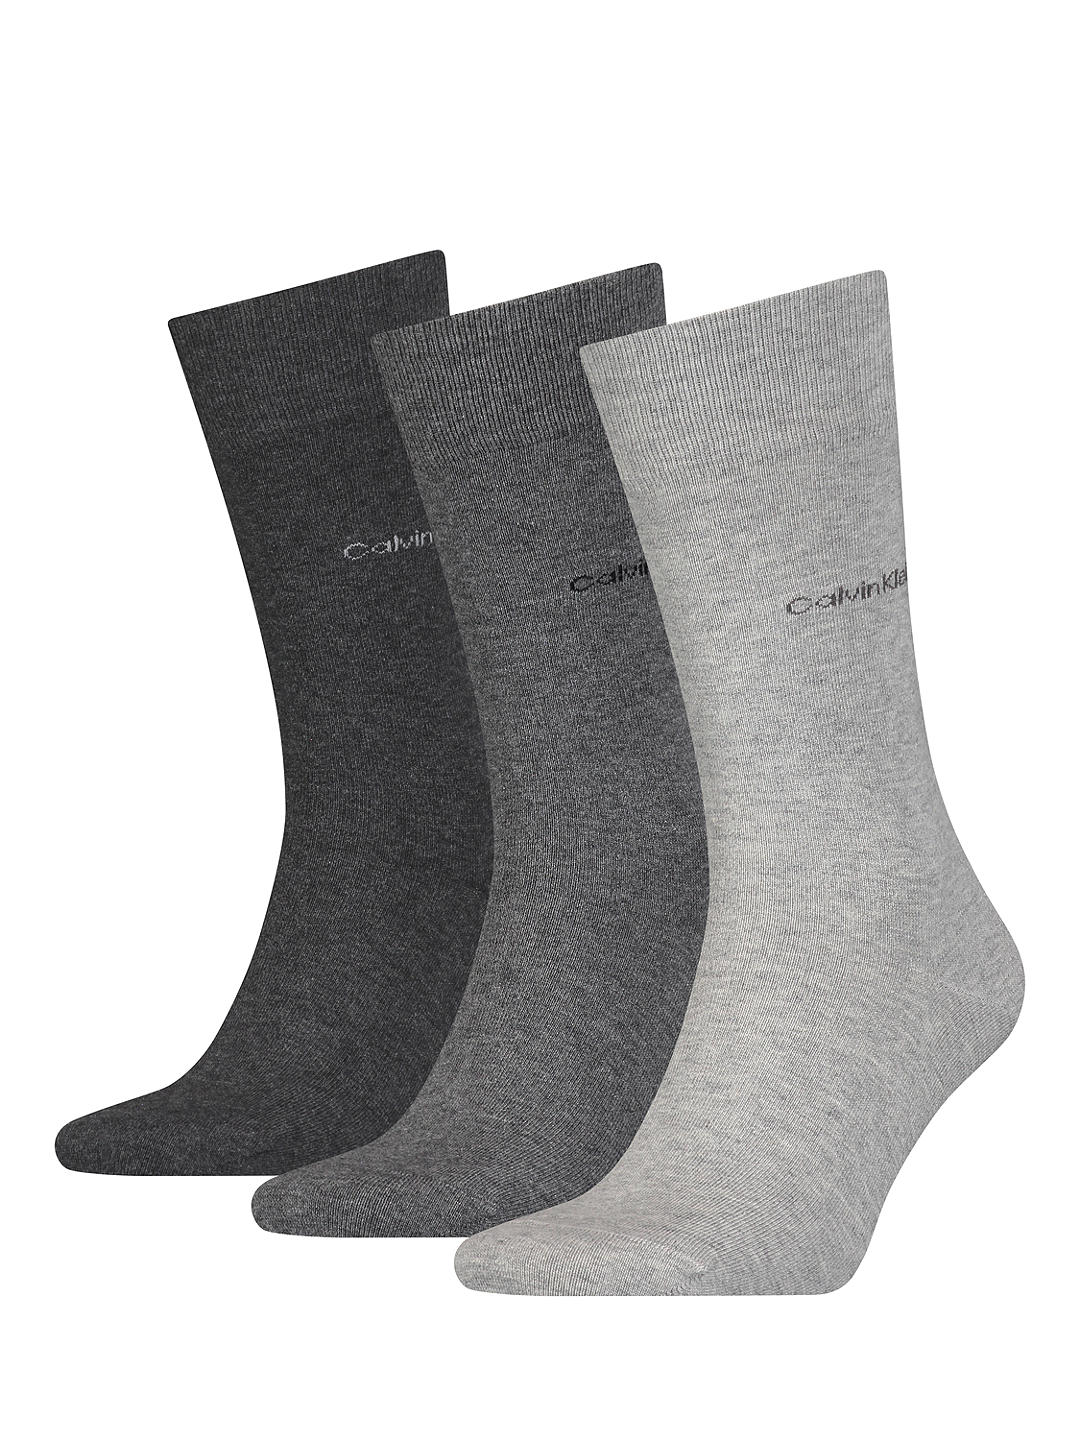 Calvin Klein Crew Socks, One Size, Pack of 3, Grey Multi at John Lewis ...